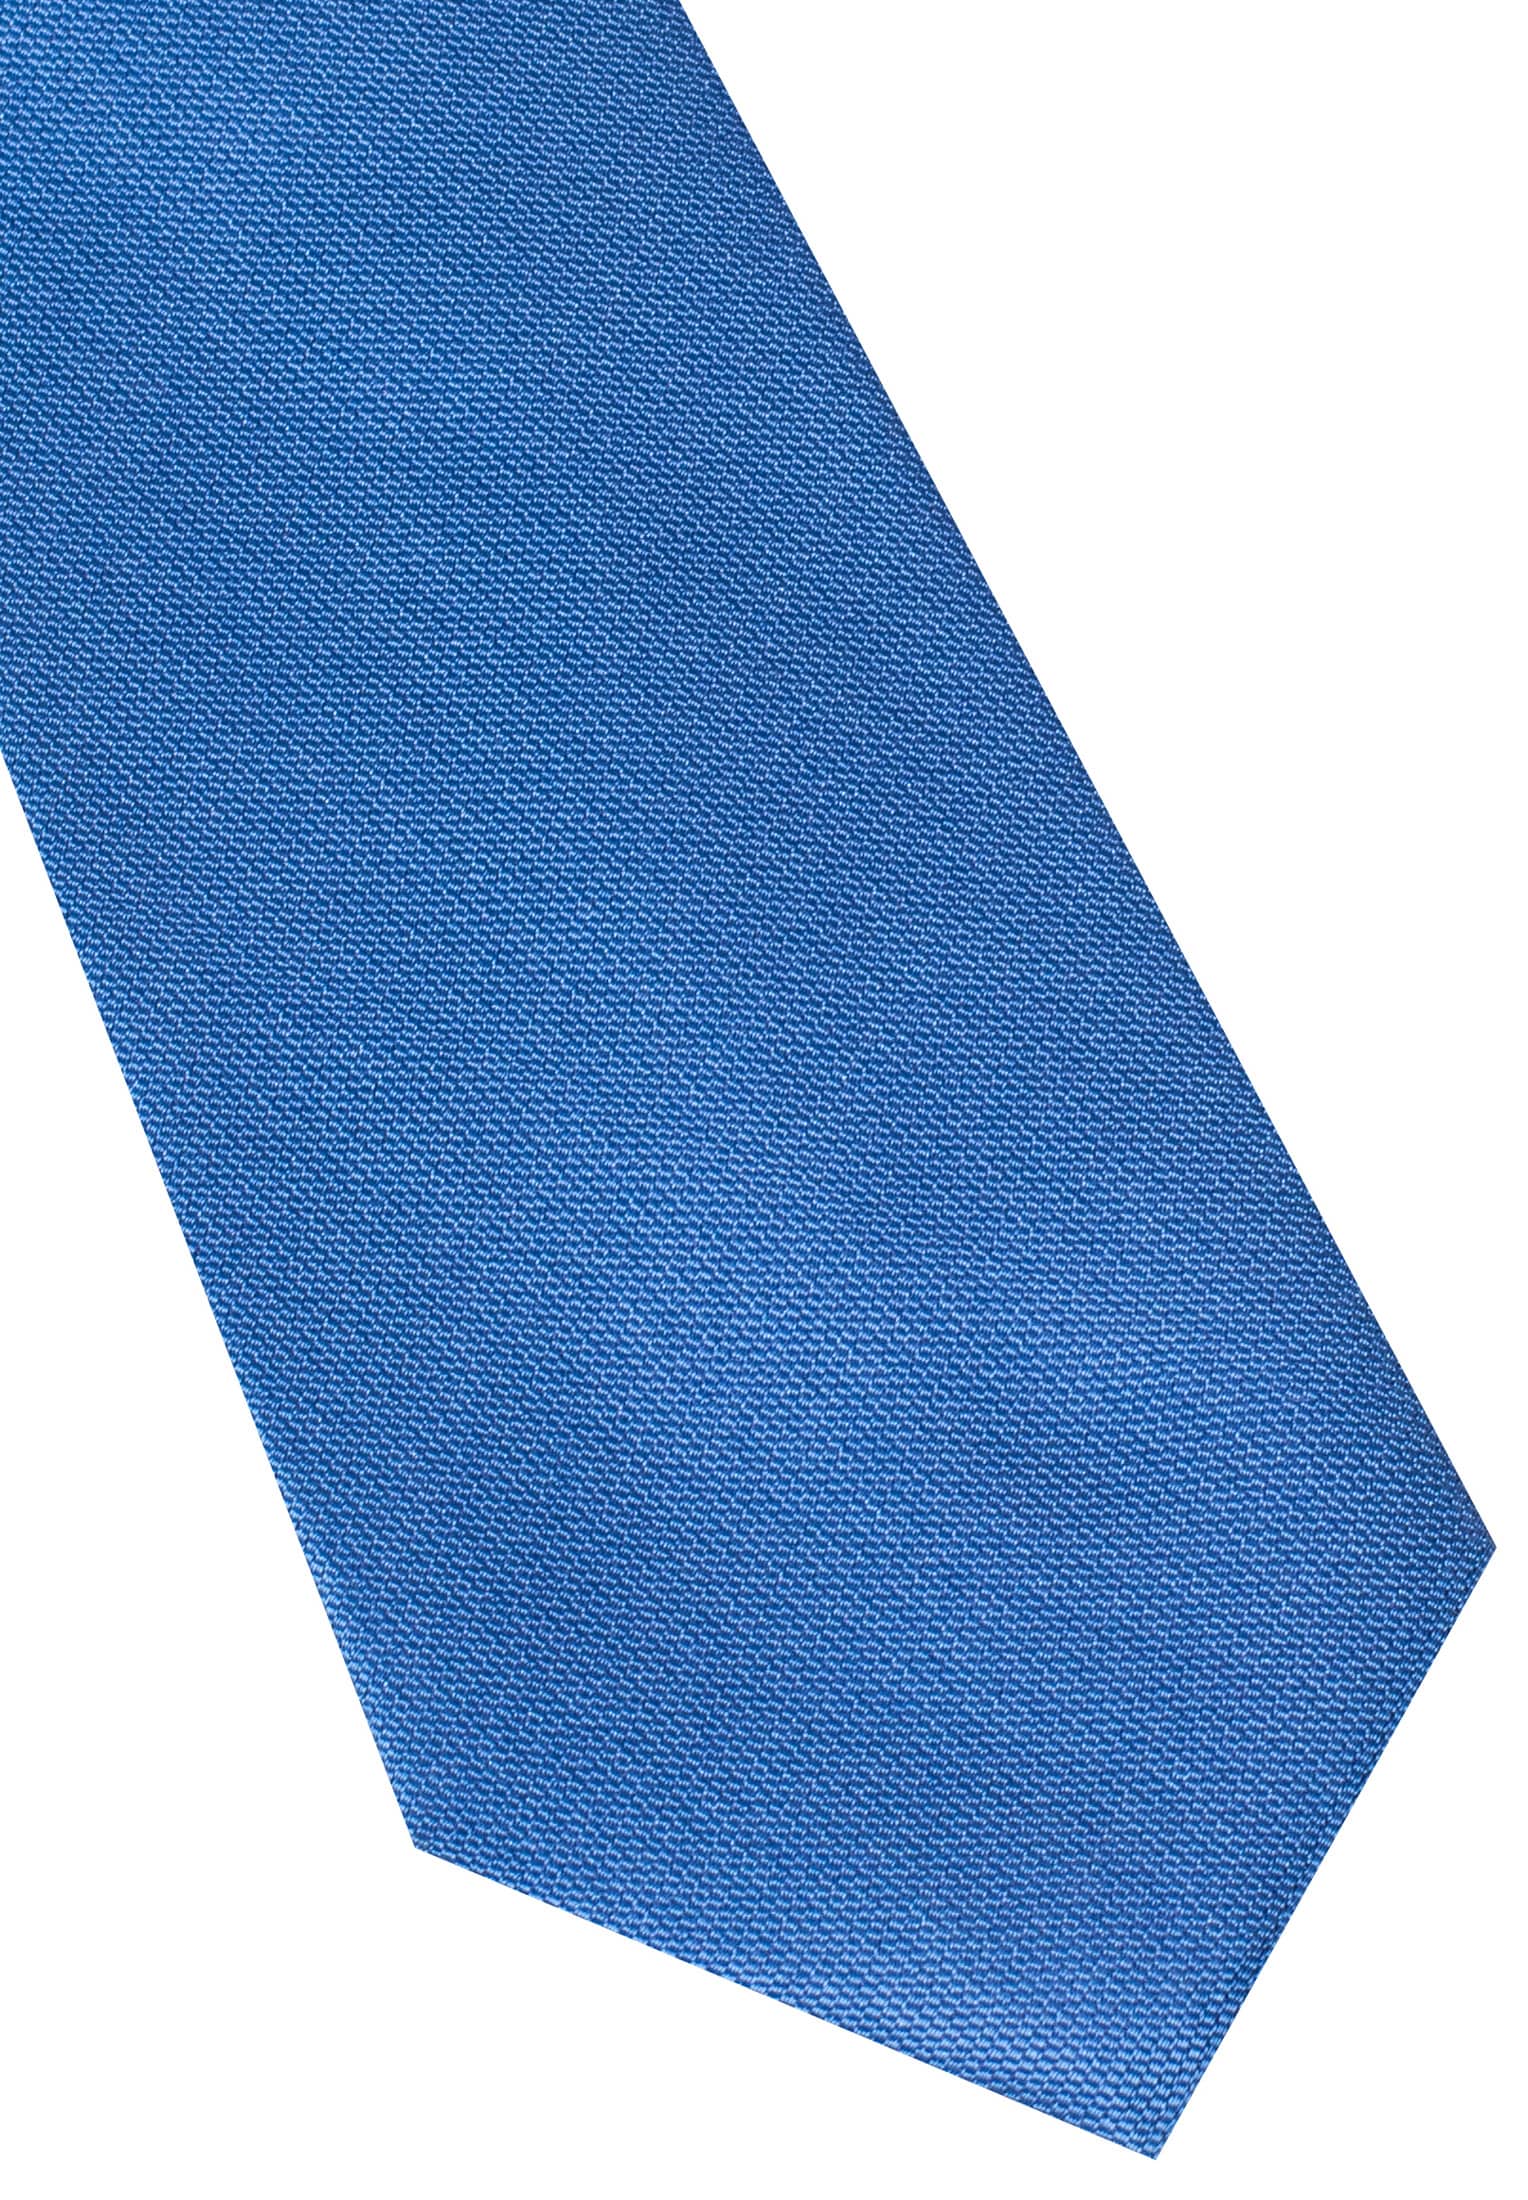 Krawatte indigo | | 142 indigo 1AC00020-01-92-142 unifarben | in